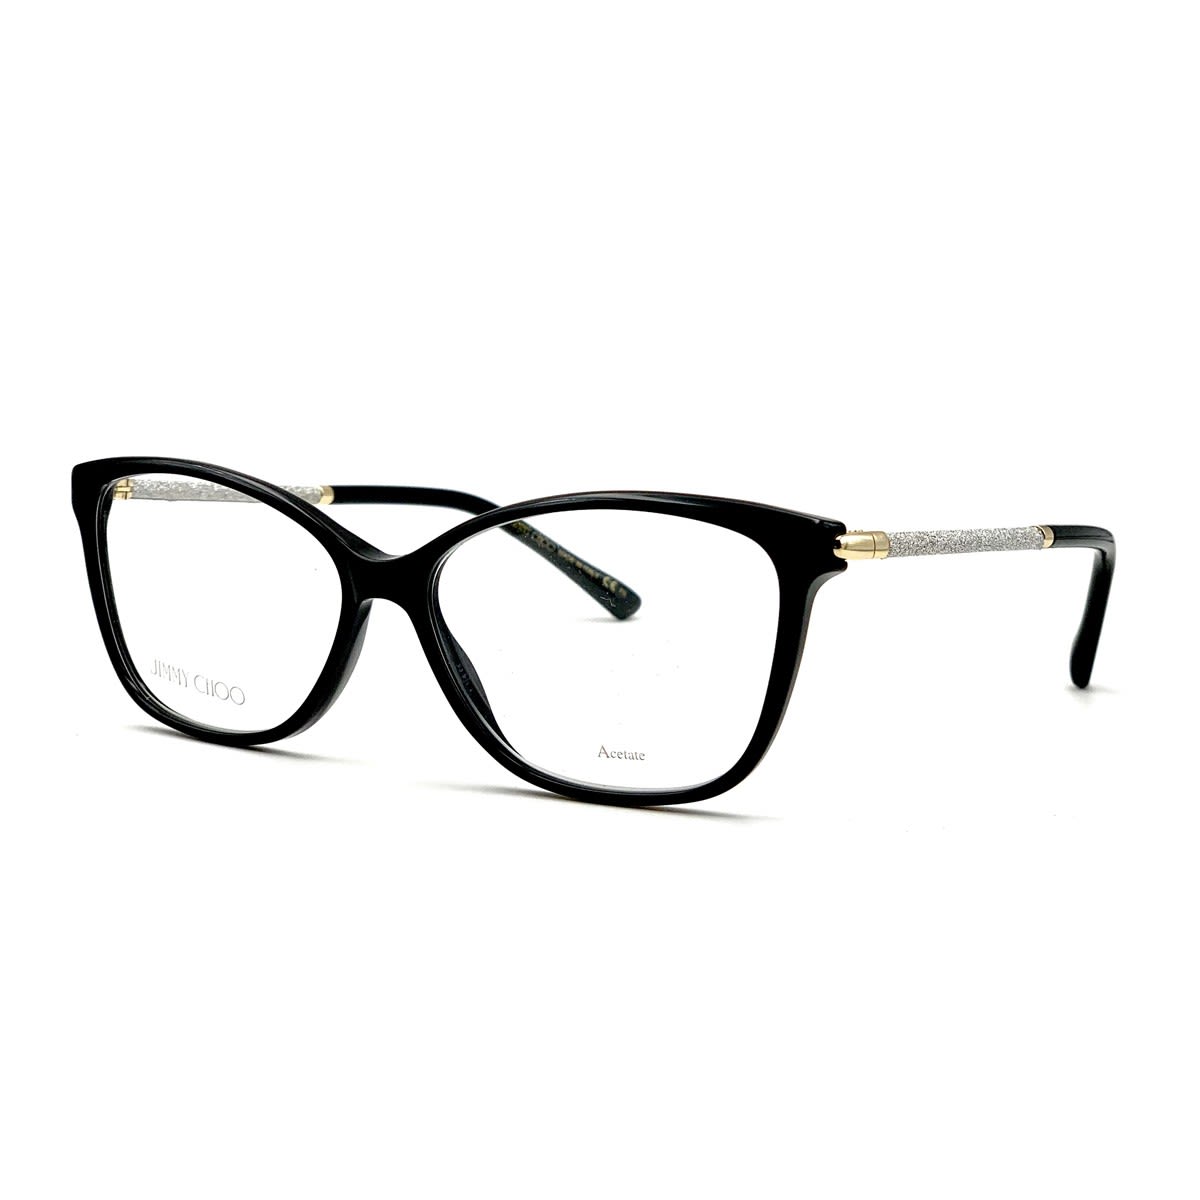 Jimmy Choo Eyewear Jc320 Glasses